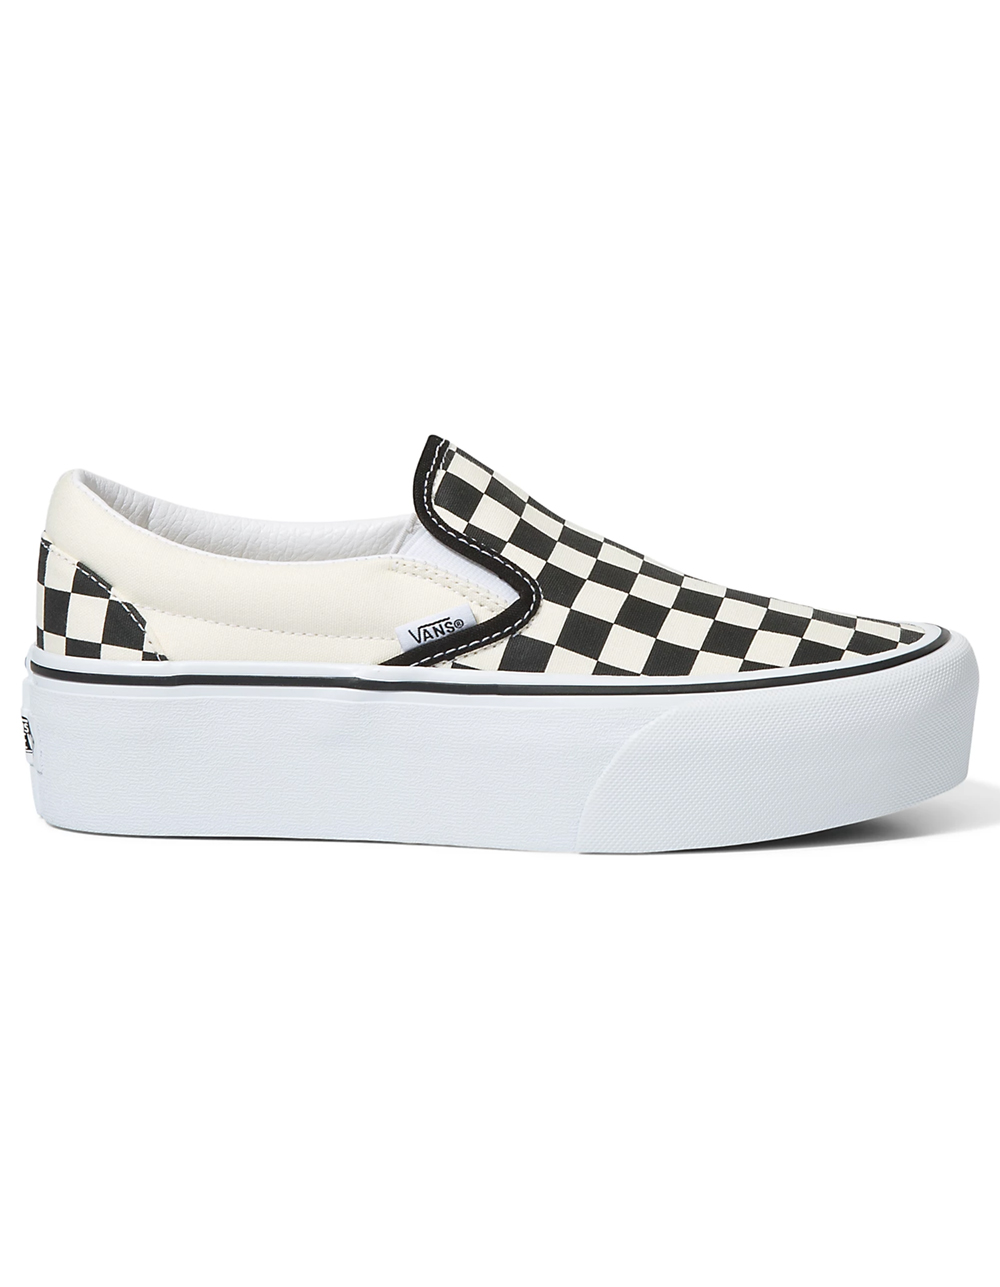 Vans Classic Slip-On Stackform Sneakers in checkerboard-Black